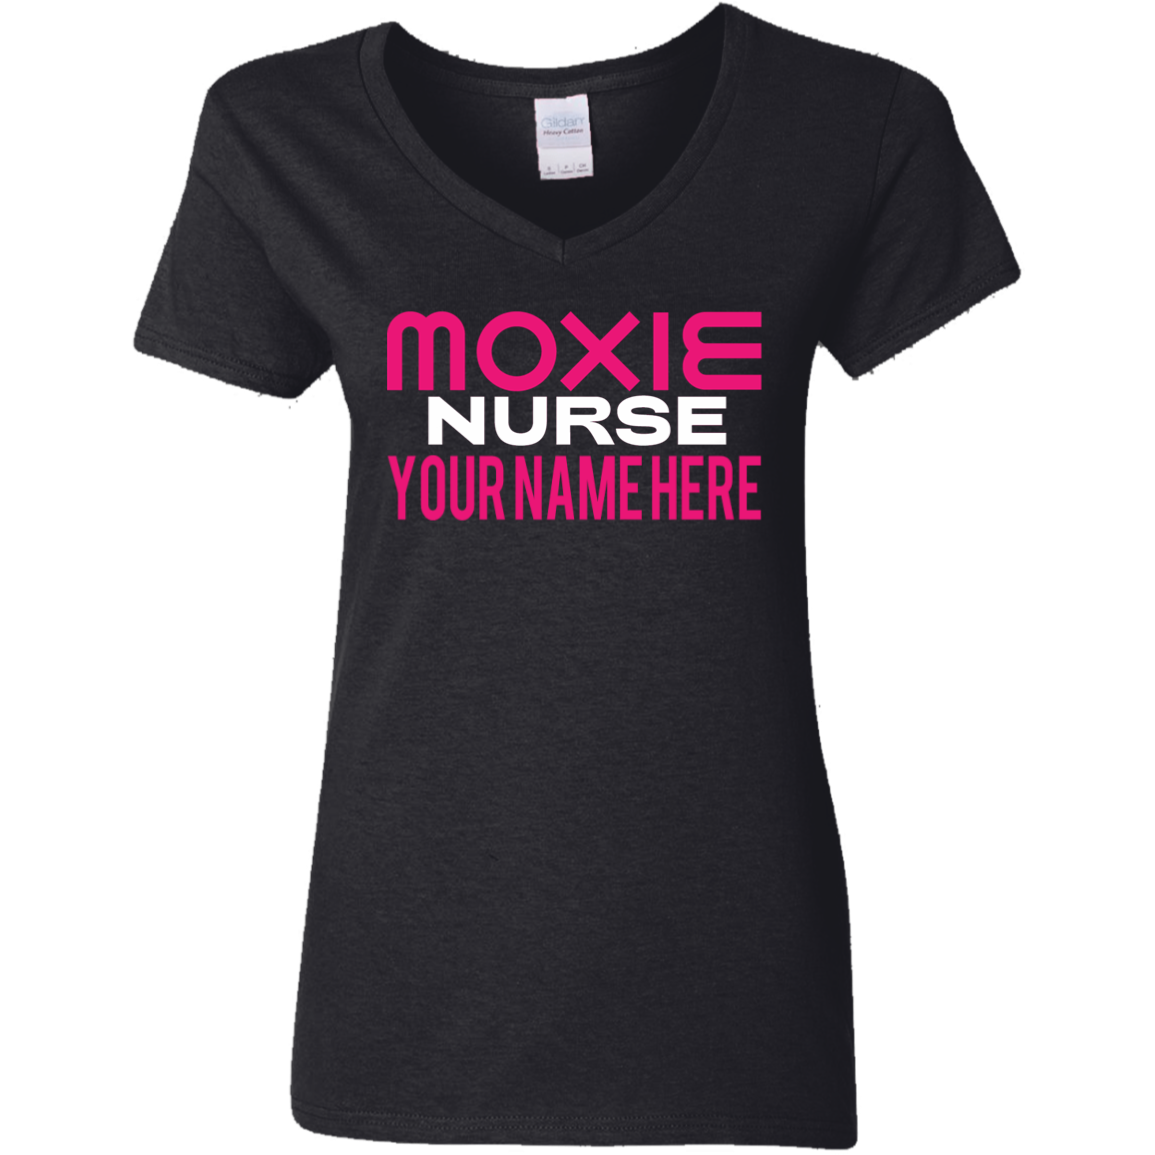 MOXIE Nurse Ladies V-Neck T-Shirt - Personalize